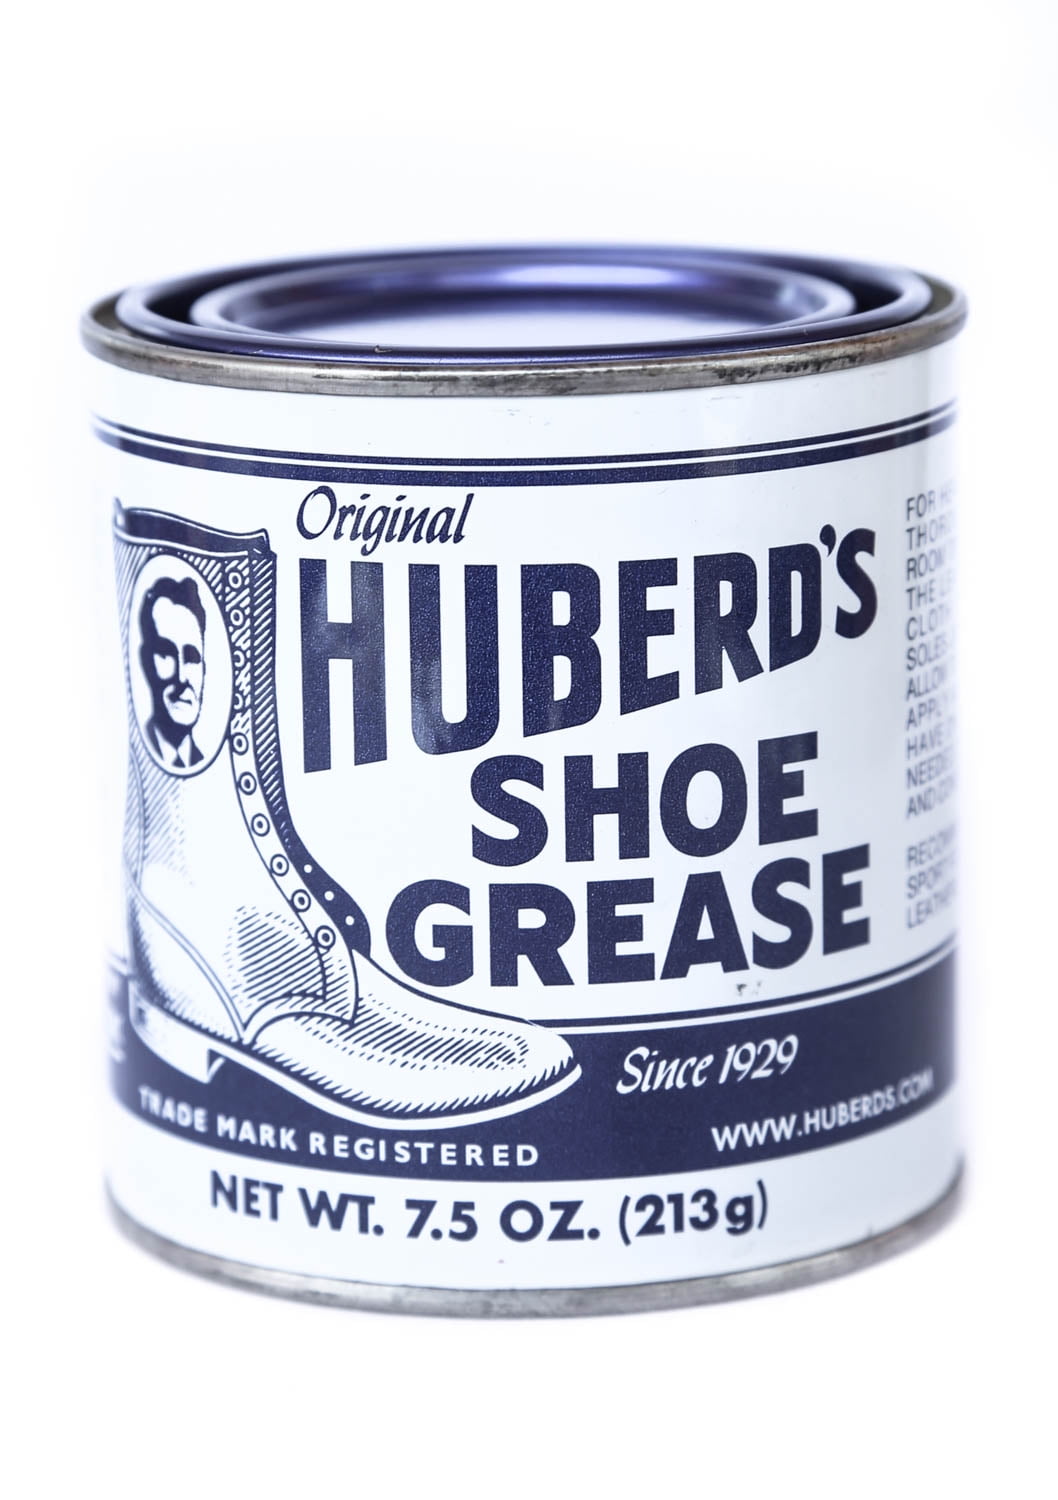 huberd's shoe grease